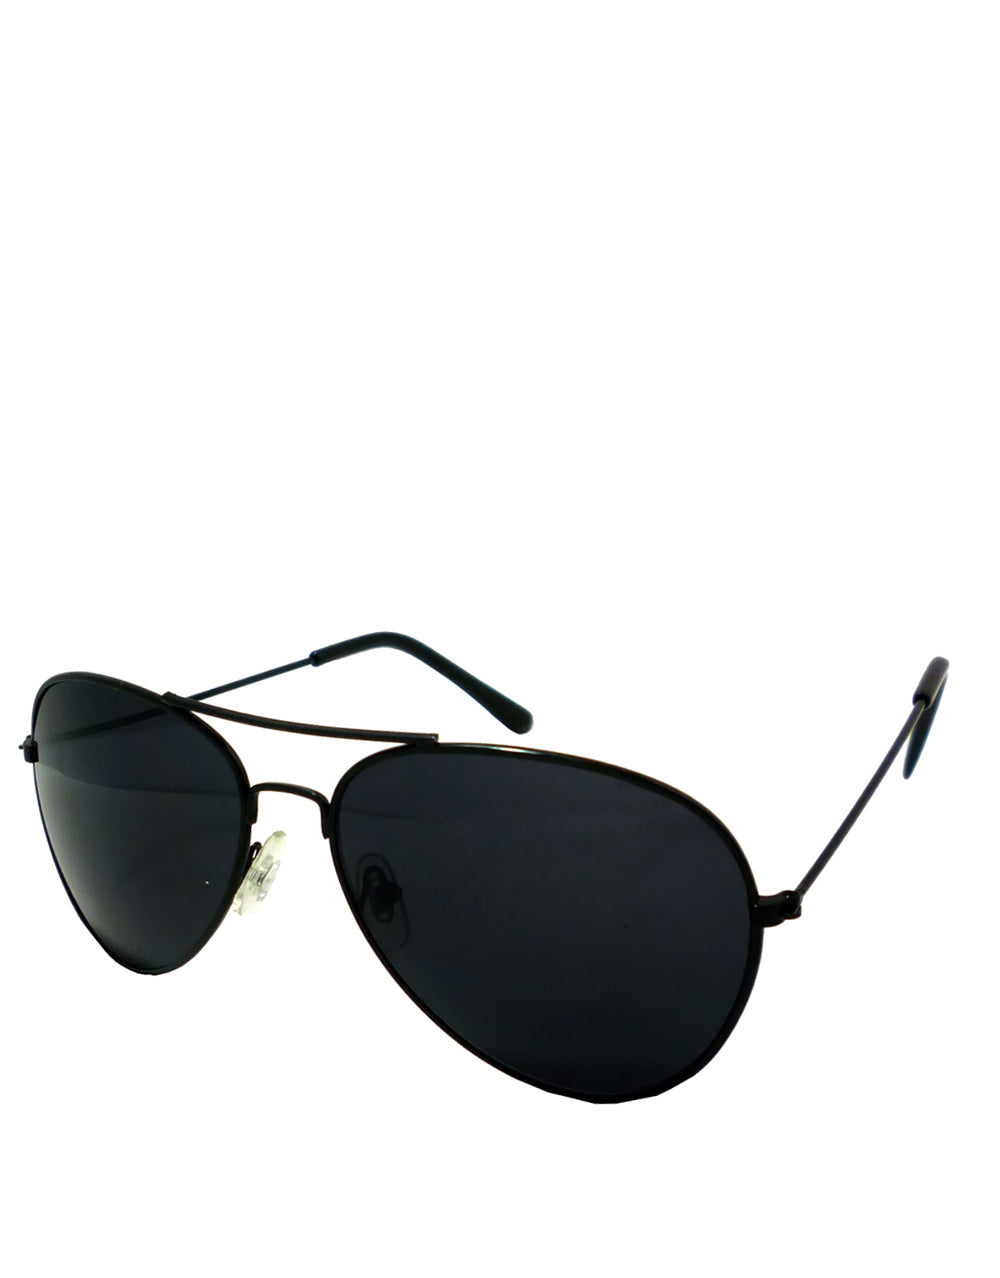 B. Instinct Douglas Style Aviator Sunglasses, Black Frame / Smoke Lens